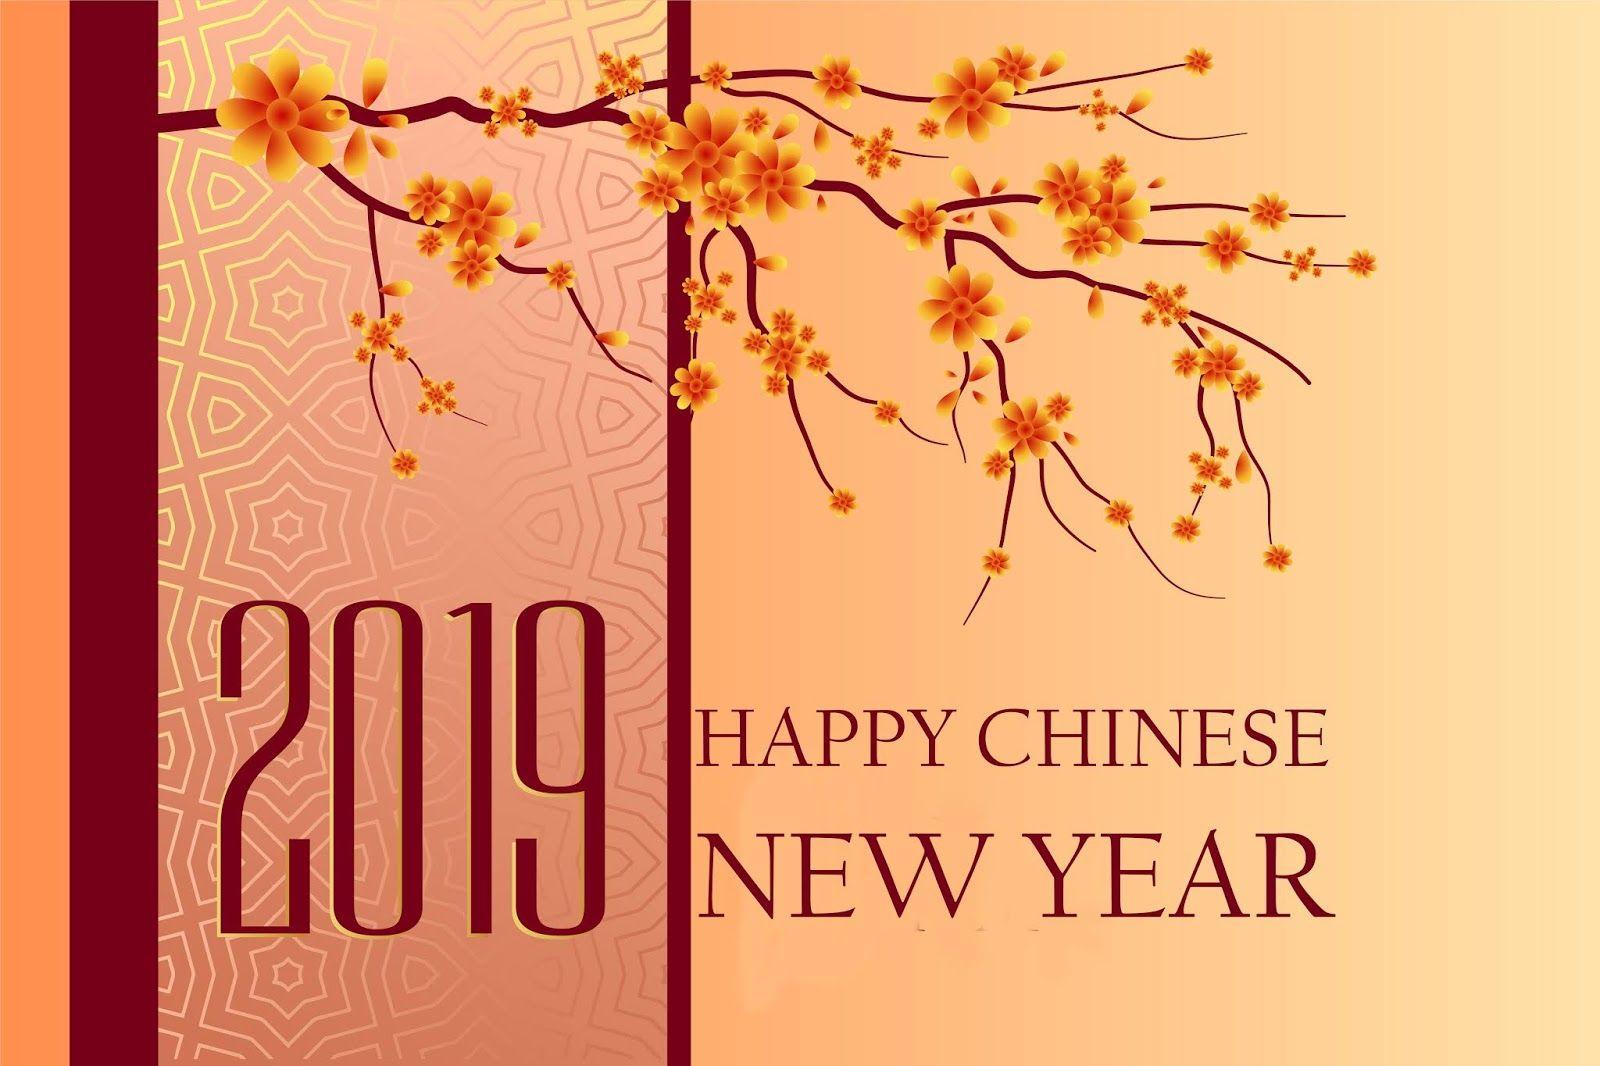 Chinese New Year. Chinese New Year Image. Chinese New Year